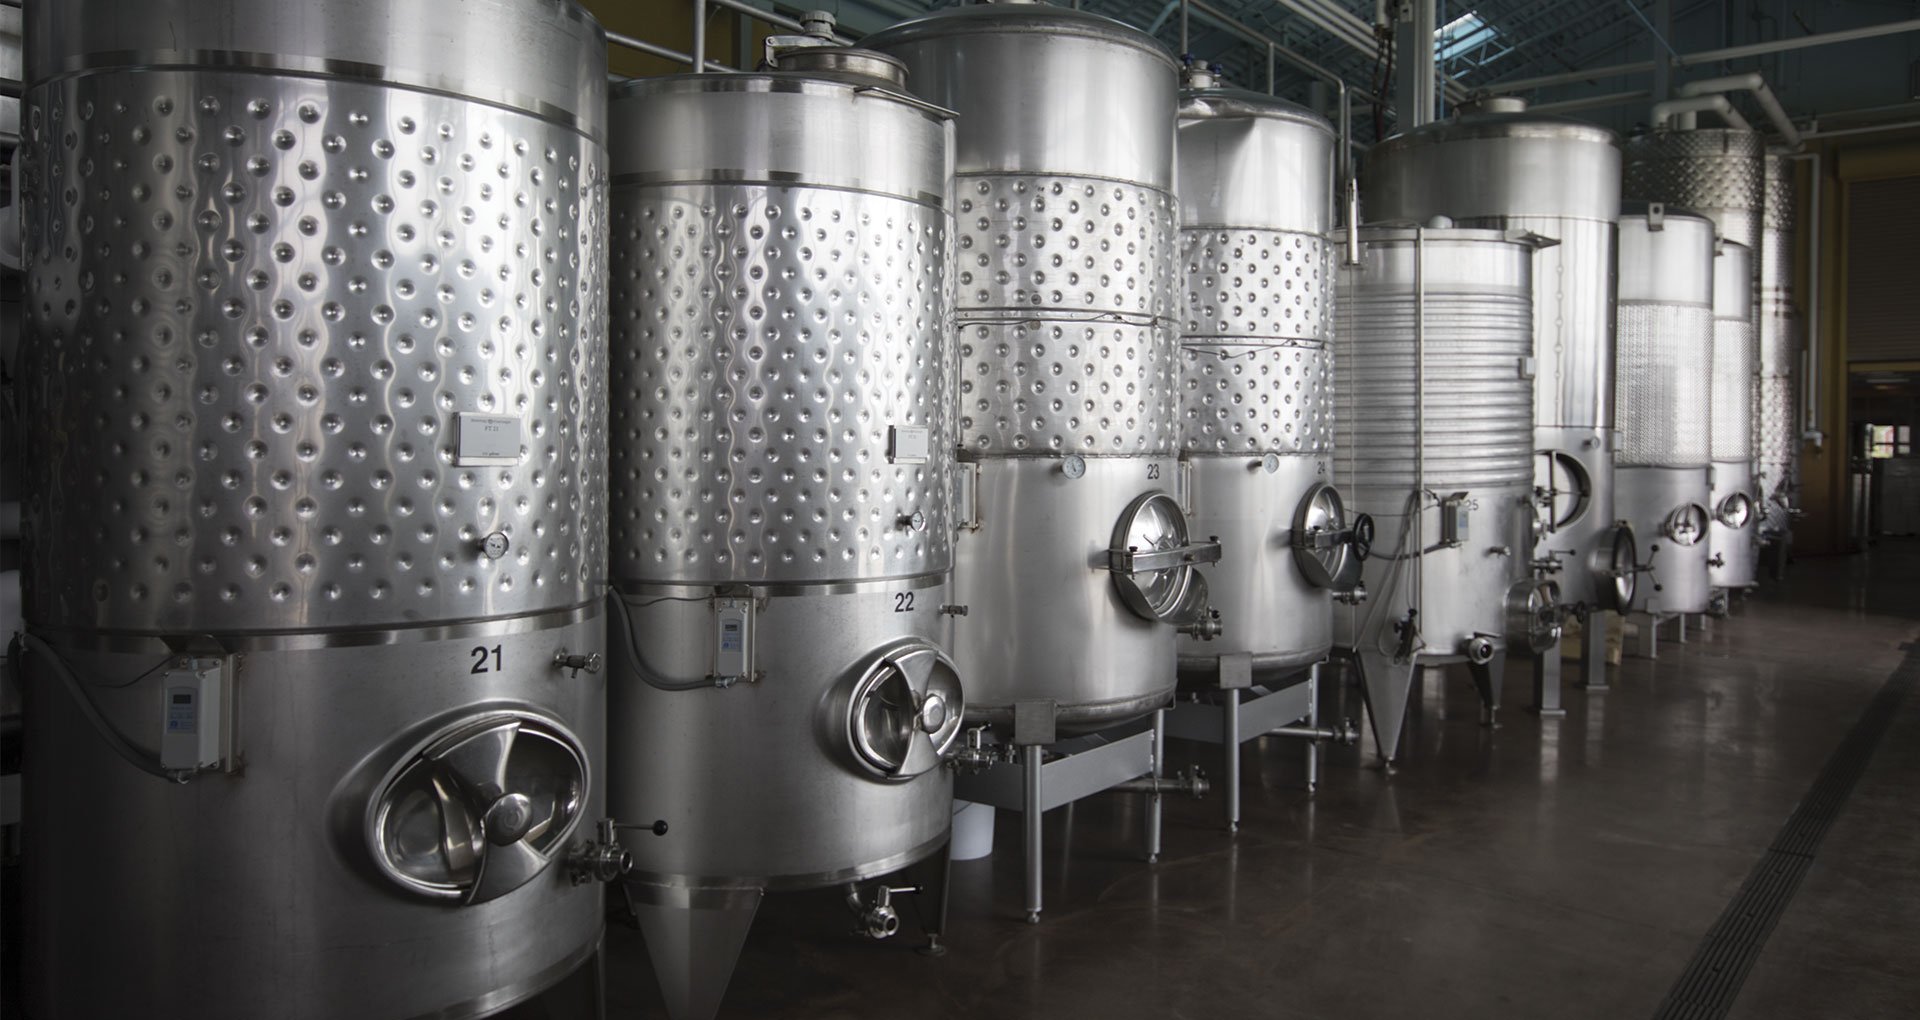 The Winery Lab; Improving Wine Quality by Improving Wine Analysis - Wine Fermentation Tanks 1.jpg?wiDth=3840&name=Wine Fermentation Tanks 1